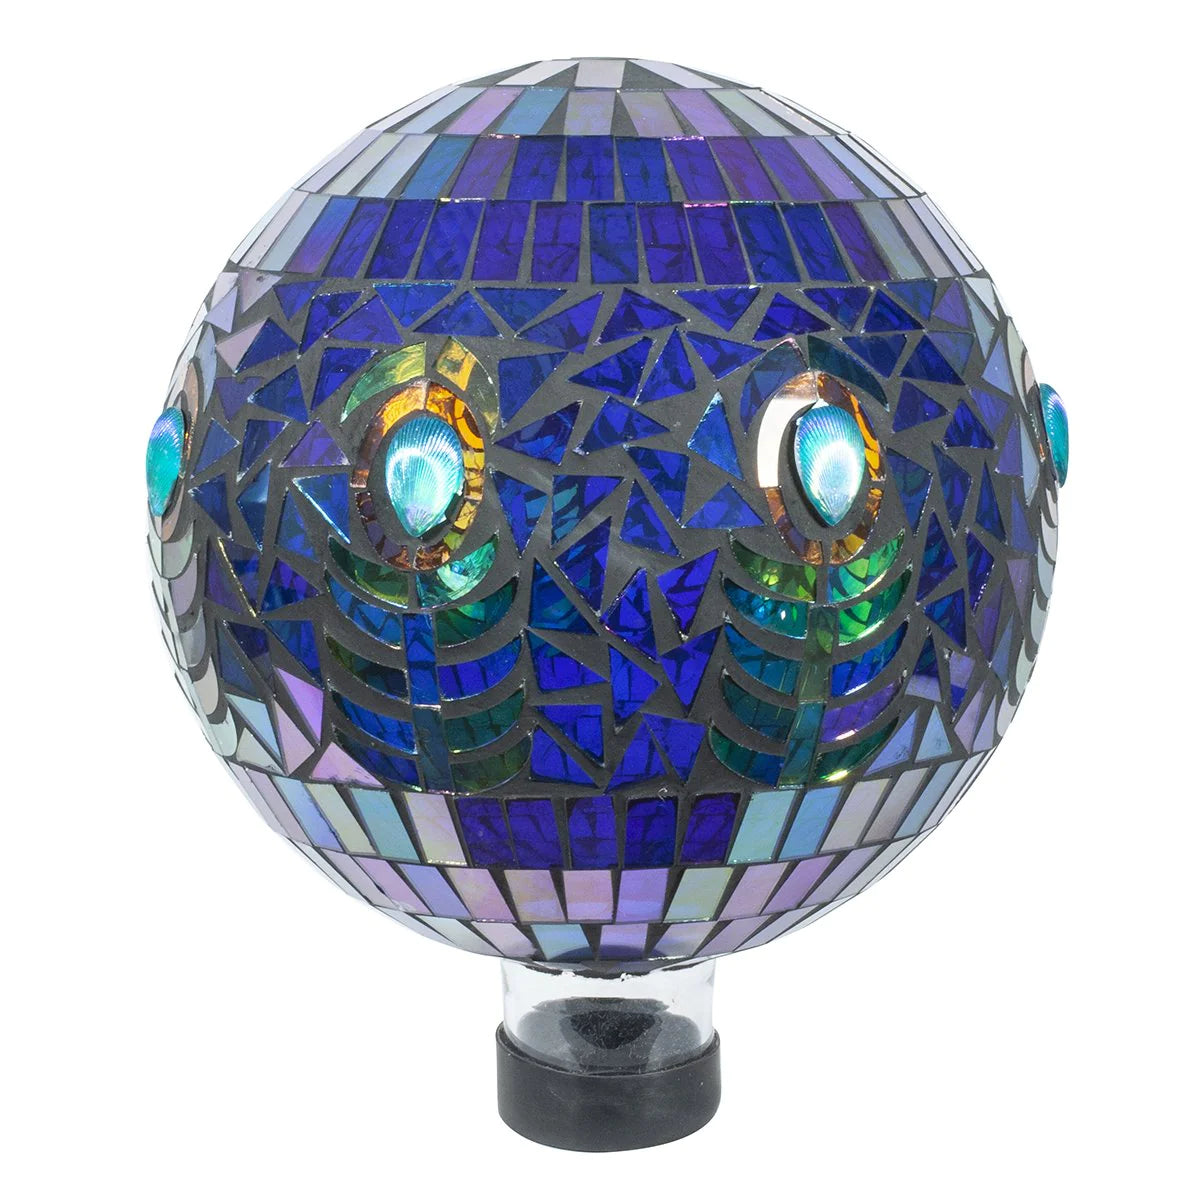 10" Translucent Peacock Mosaic Gazing Globe